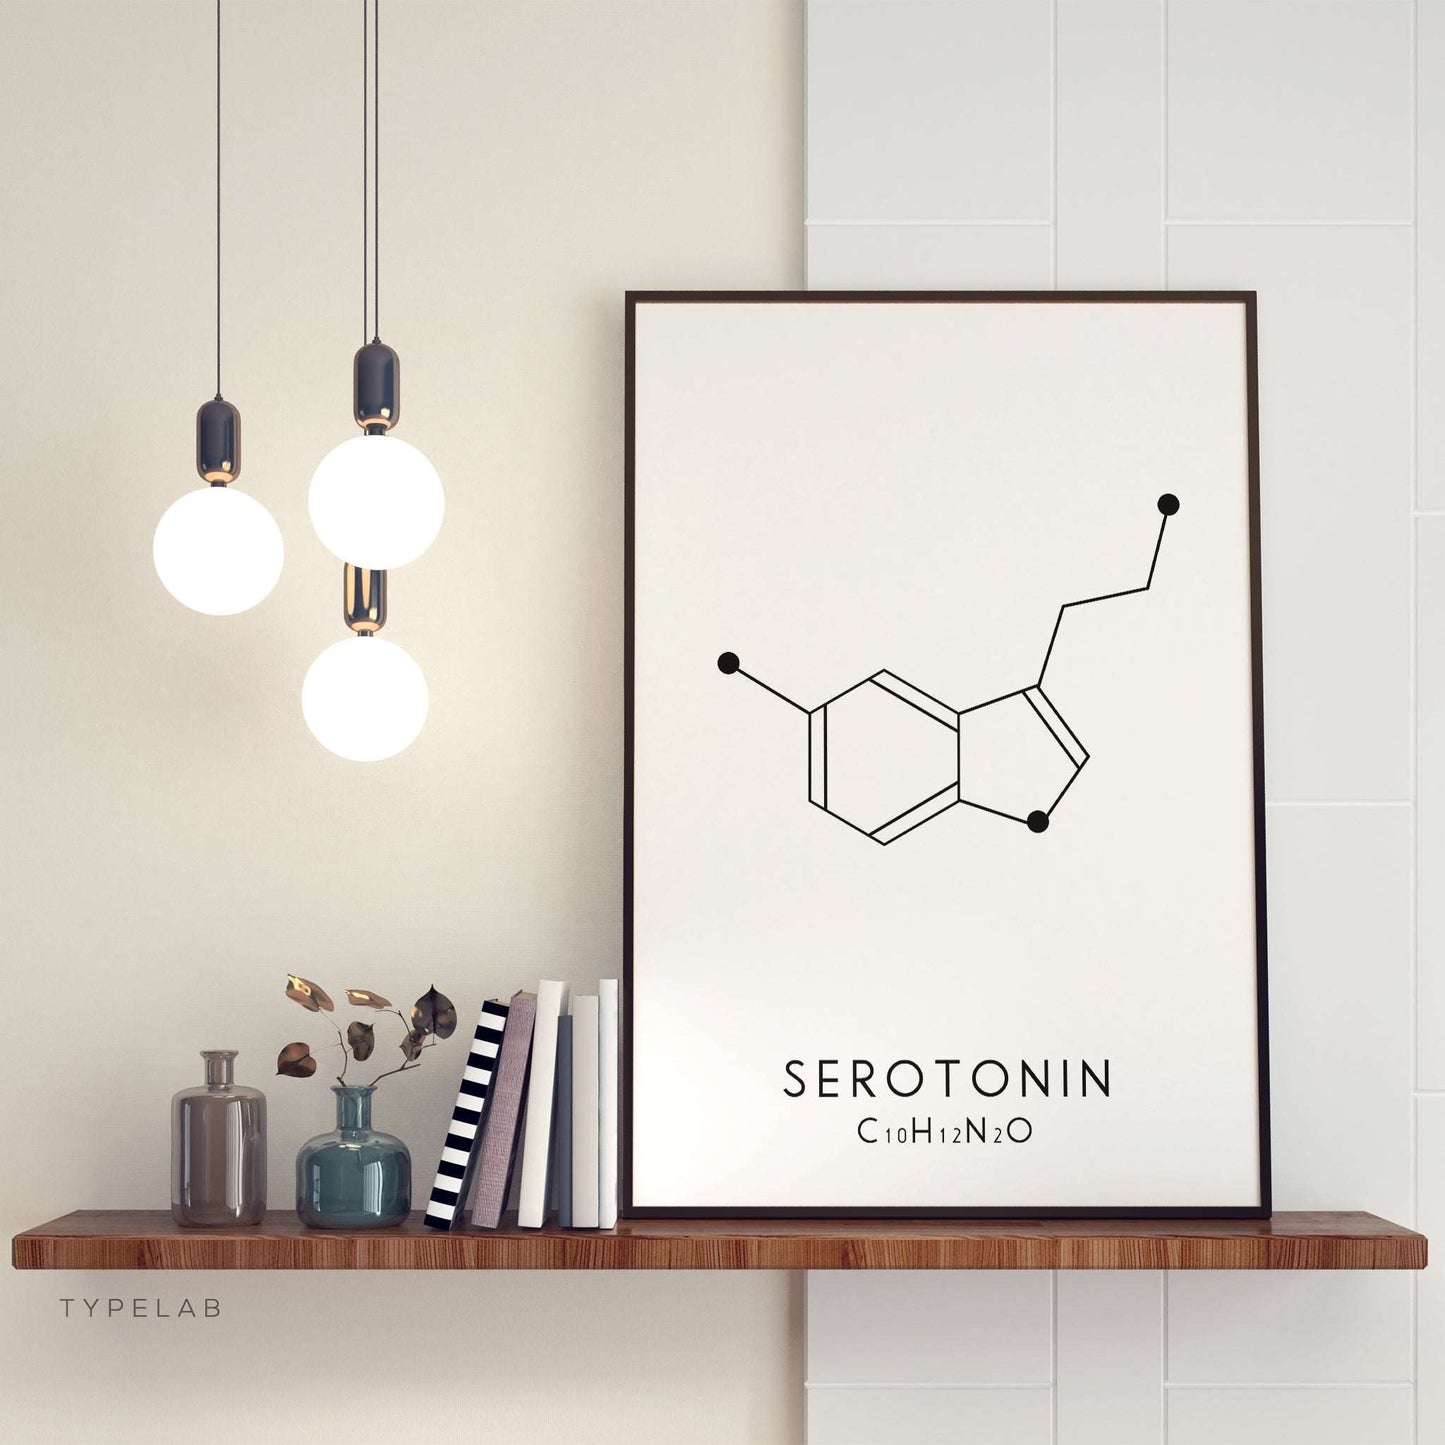 Serotonin Molecular Structure Print - Black and White Typelab